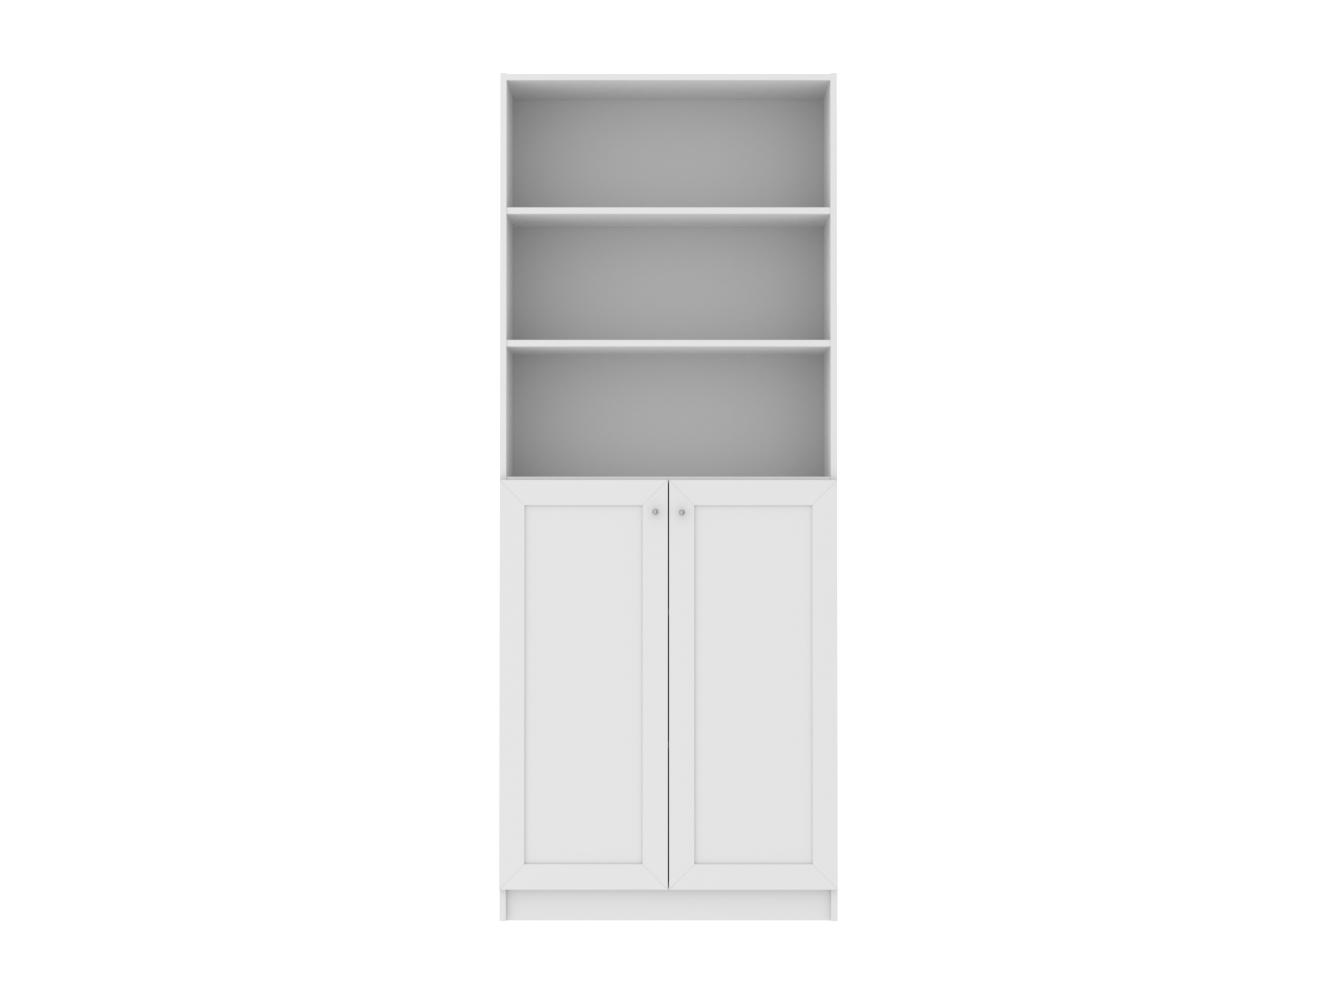  Книжный шкаф Билли 350 white ИКЕА (IKEA) изображение товара